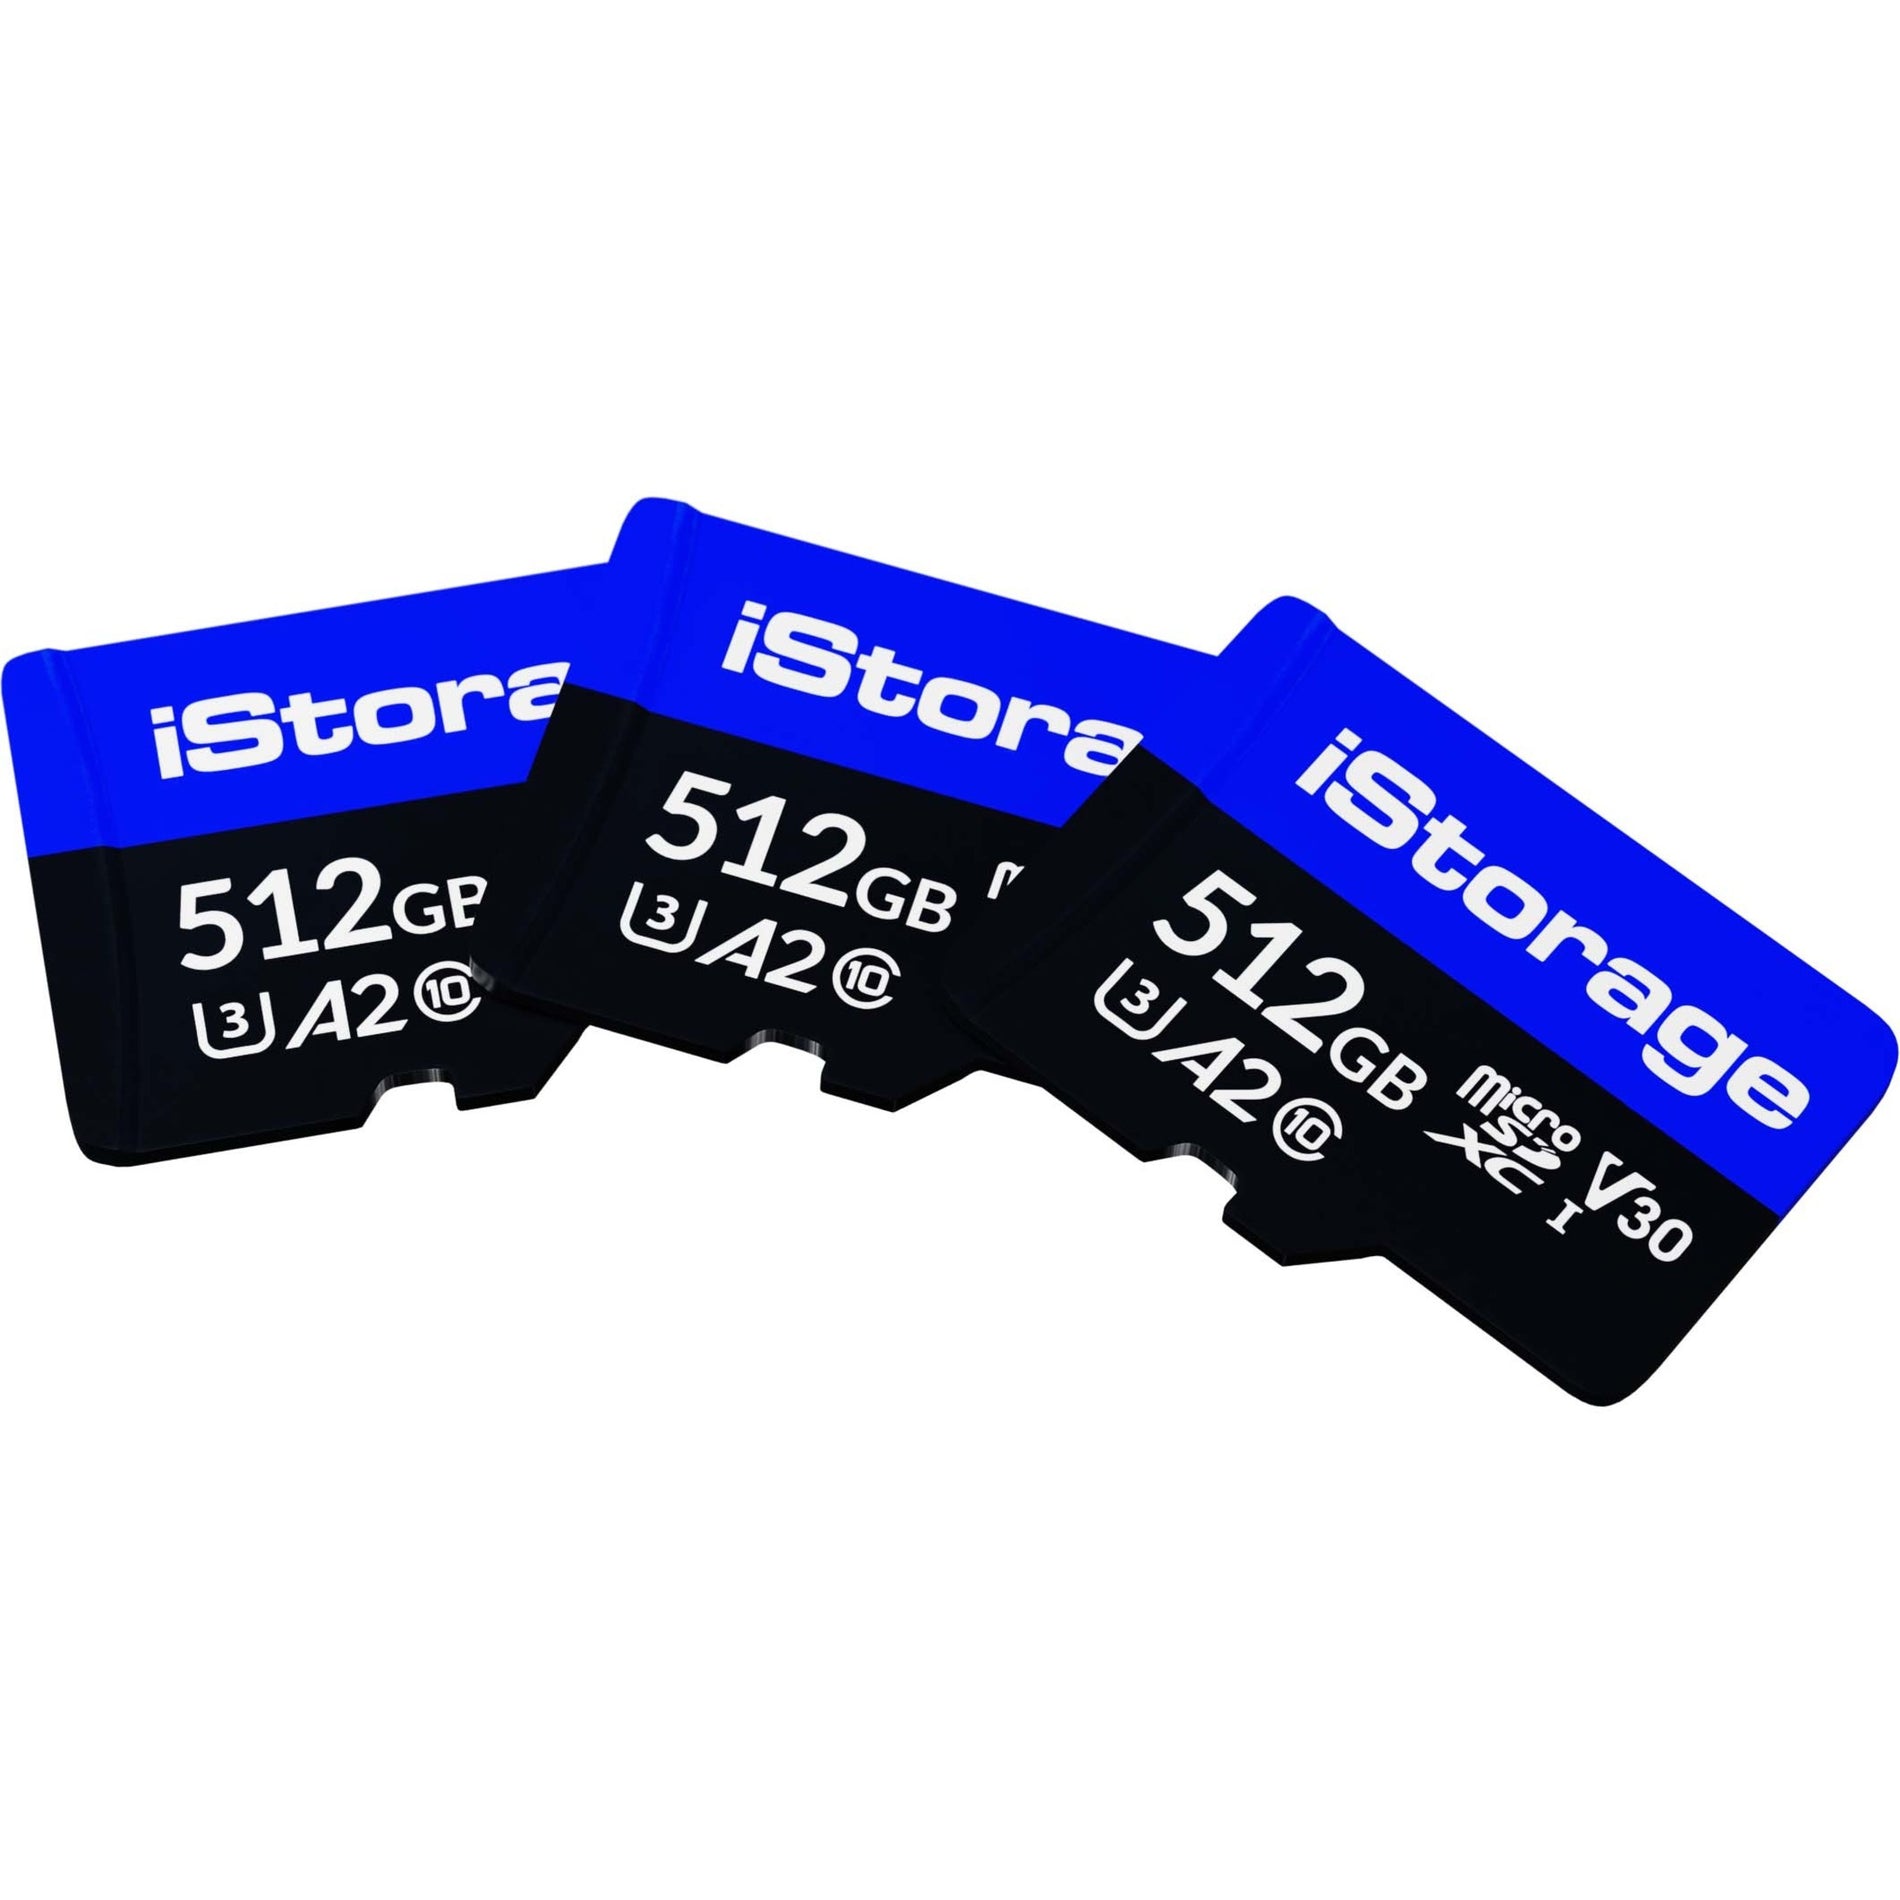 iStorage IS-MSD-3-512 512GB MicroSDXC Card, 3 Pack